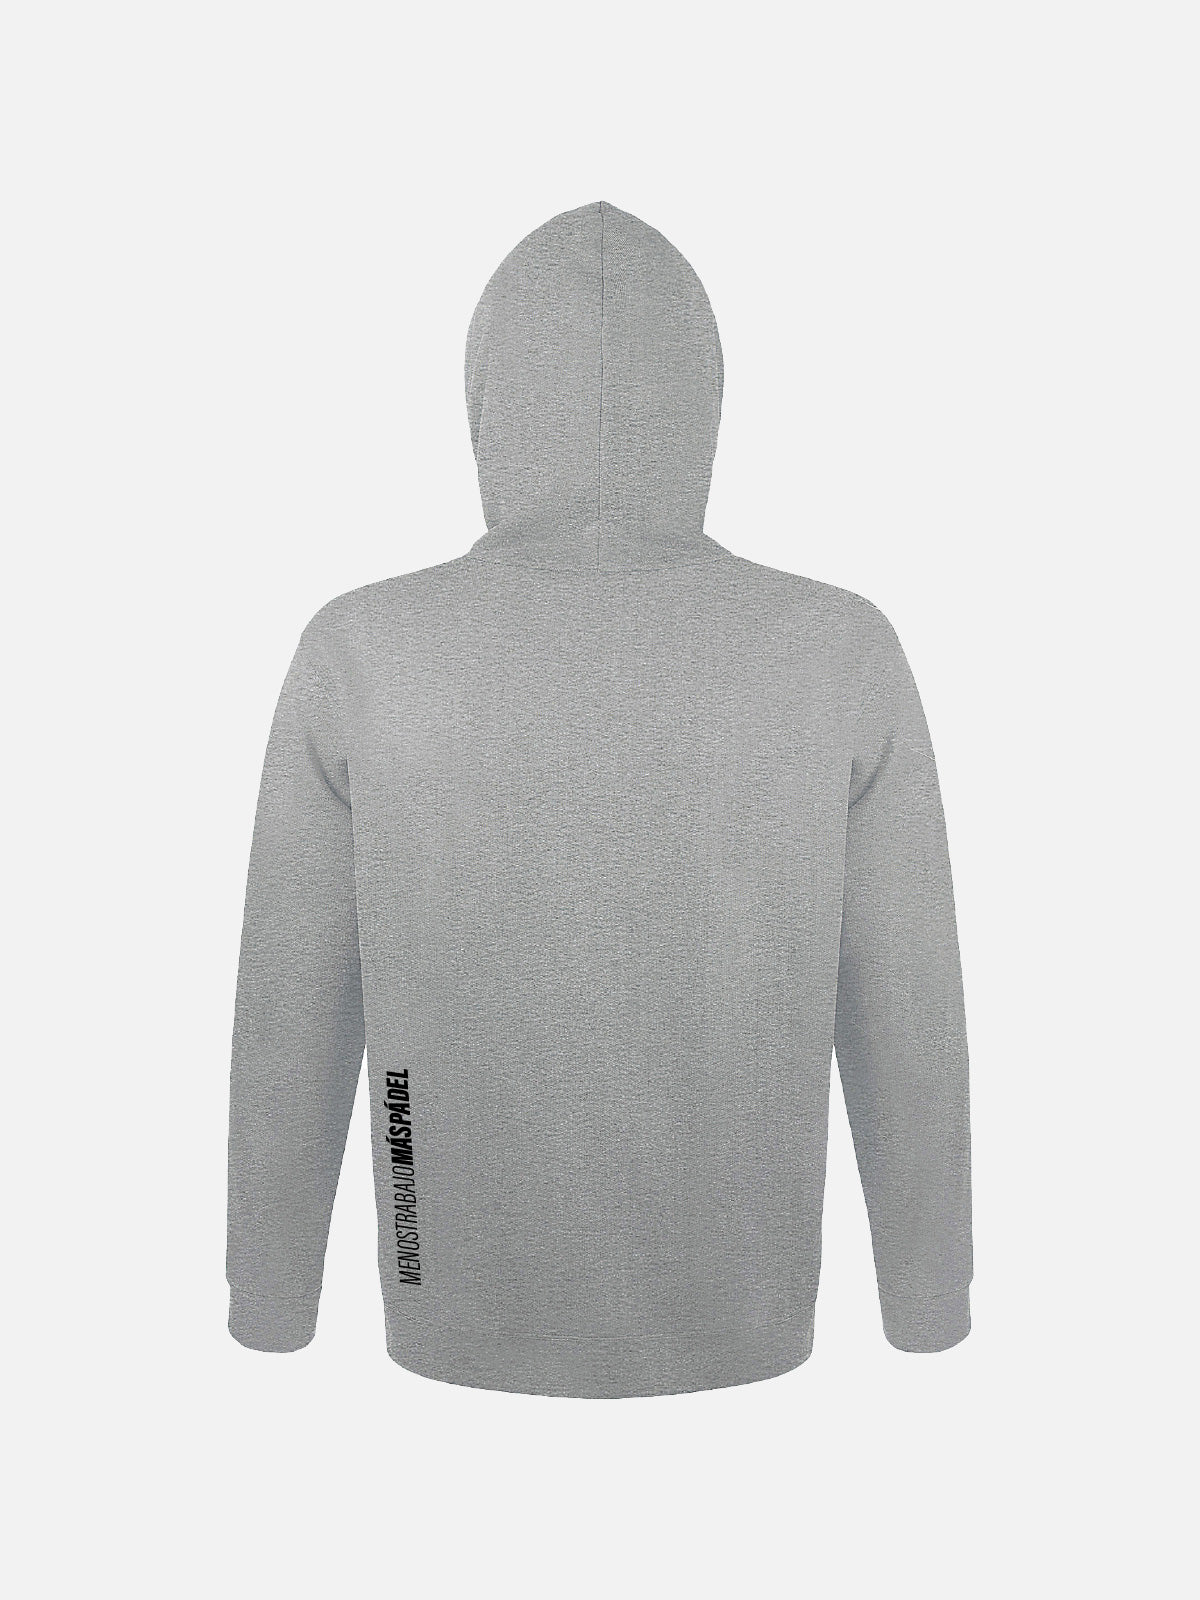 Iconic Unisex Sweatshirt - Gray Melange